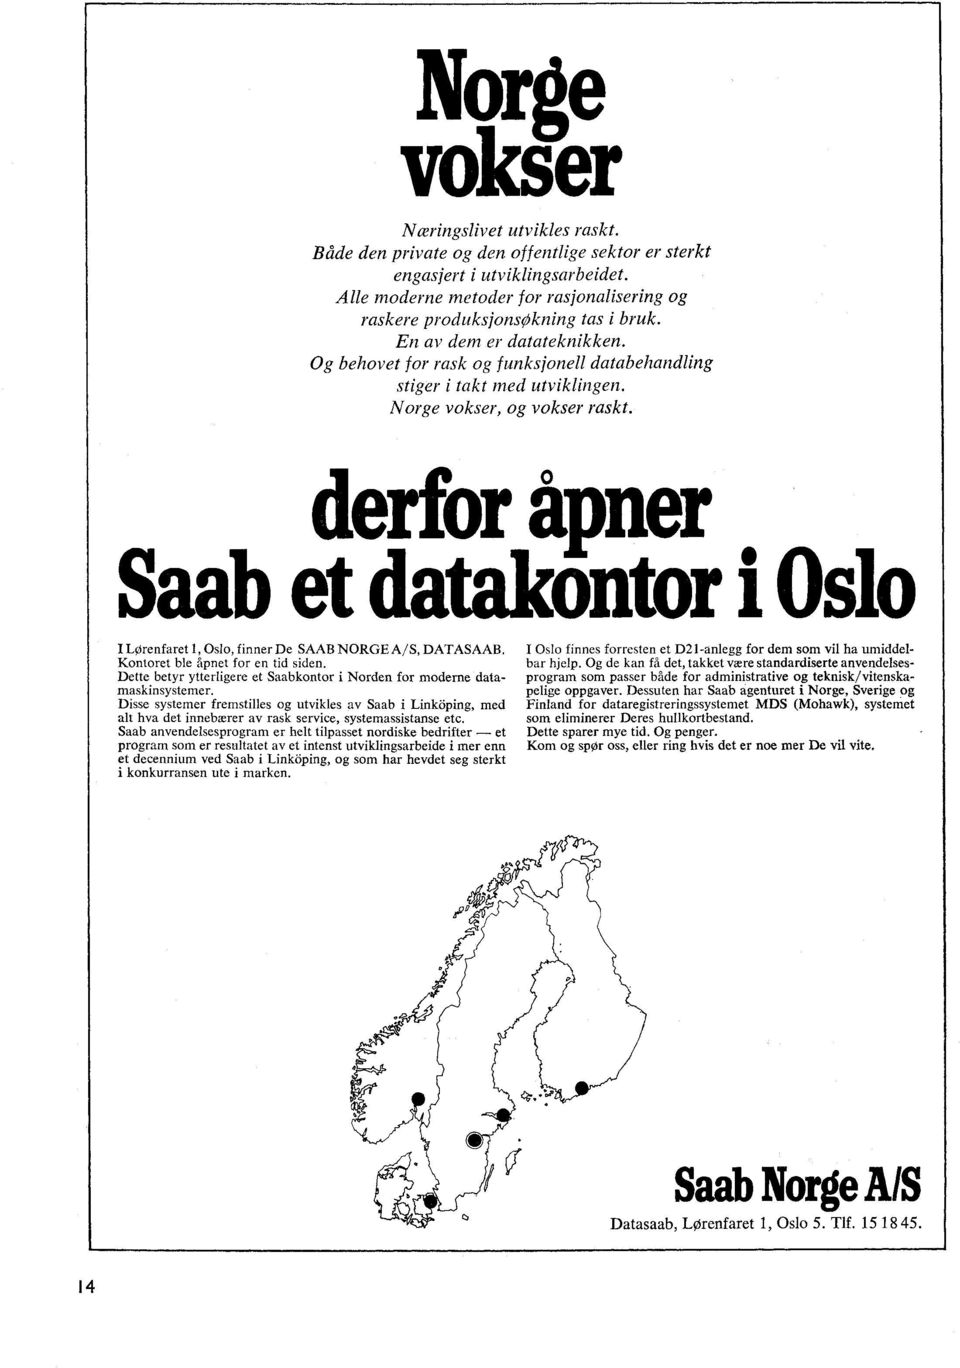 Norge vokser, og vokser raskt. derfor åpner Saab et datalaintor i Oslo I LOrenfaret 1, Oslo, finner De SAAB NORGE A/S, DATASAAB. Kontoret ble åpnet for en tid siden.